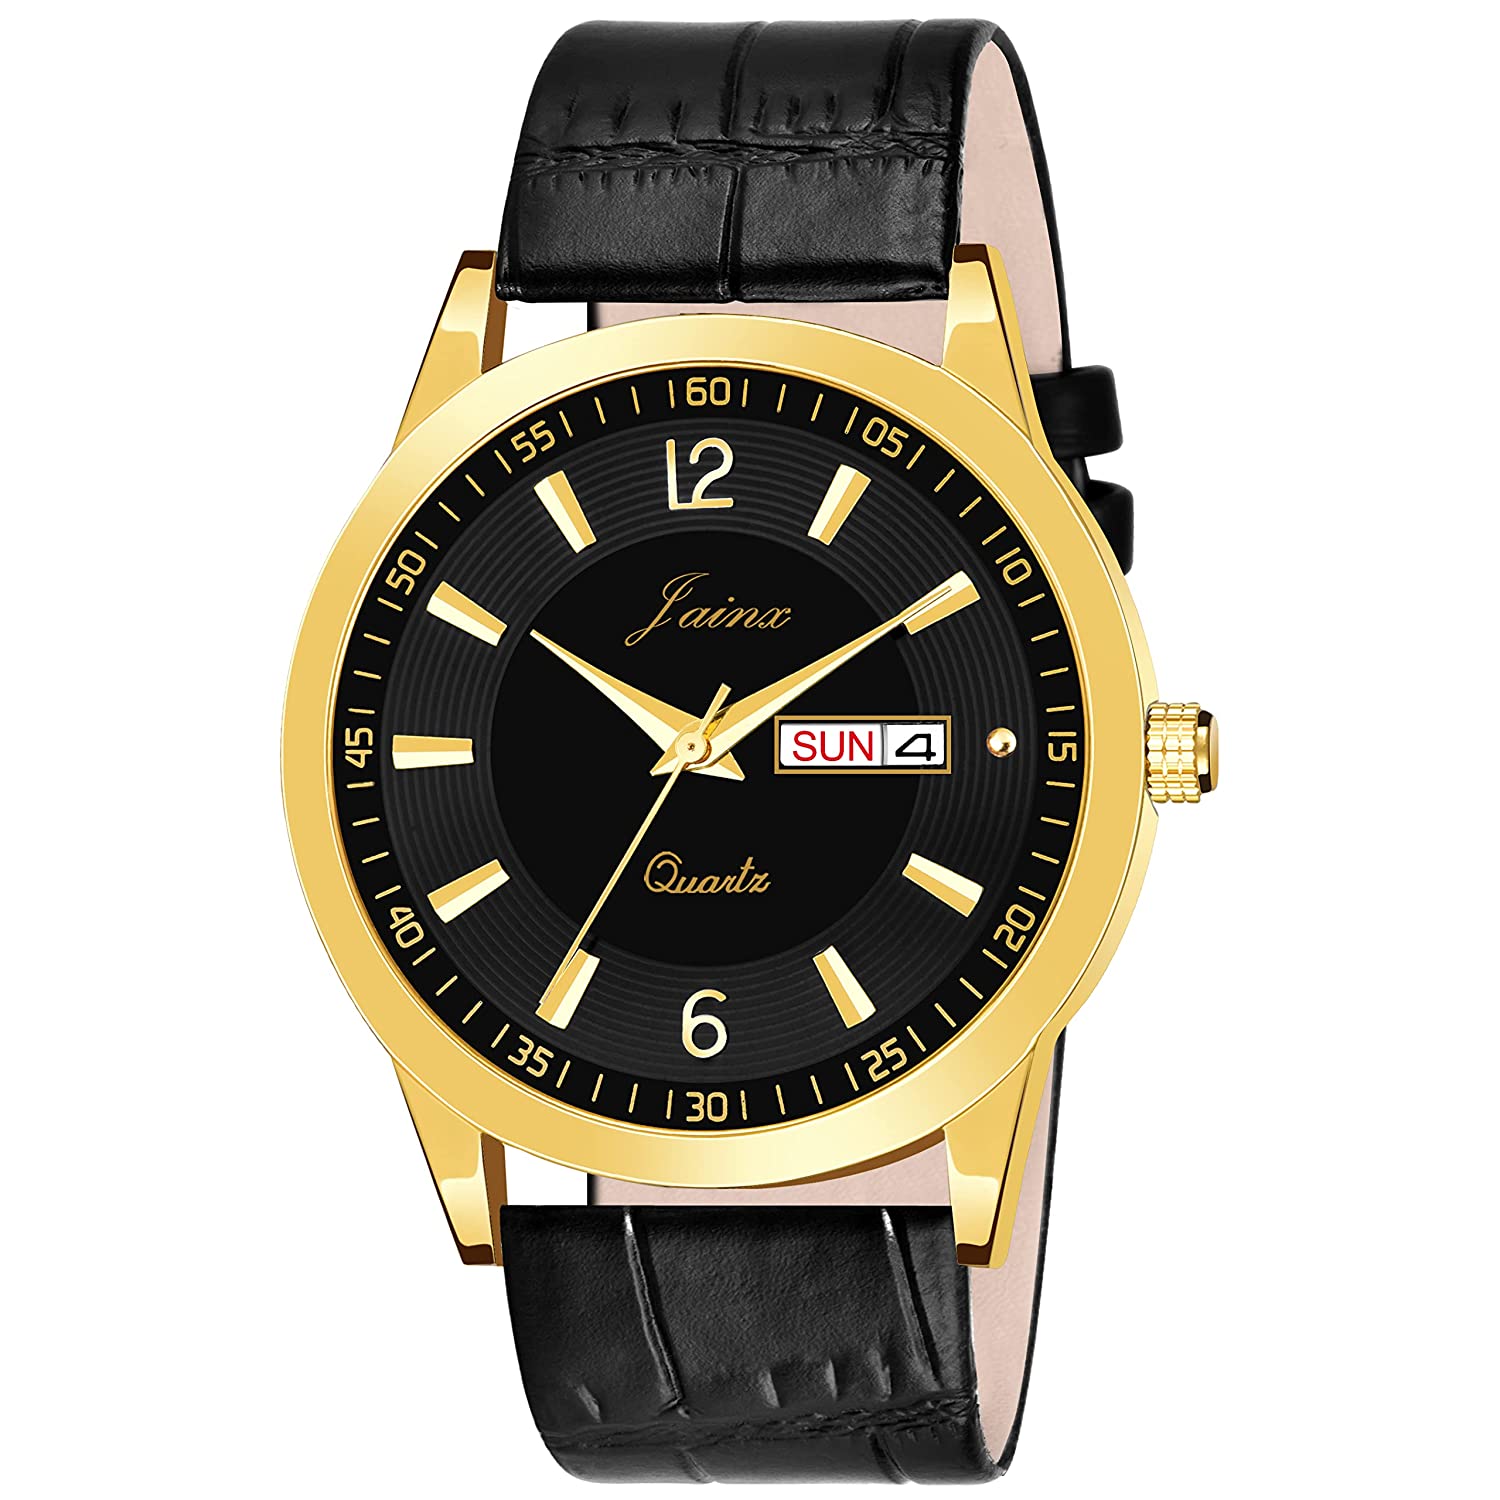 Premium Black Day & Date Function Dial Black Leather Strap Analog Watch - For Men JM1165 - Jainx Store